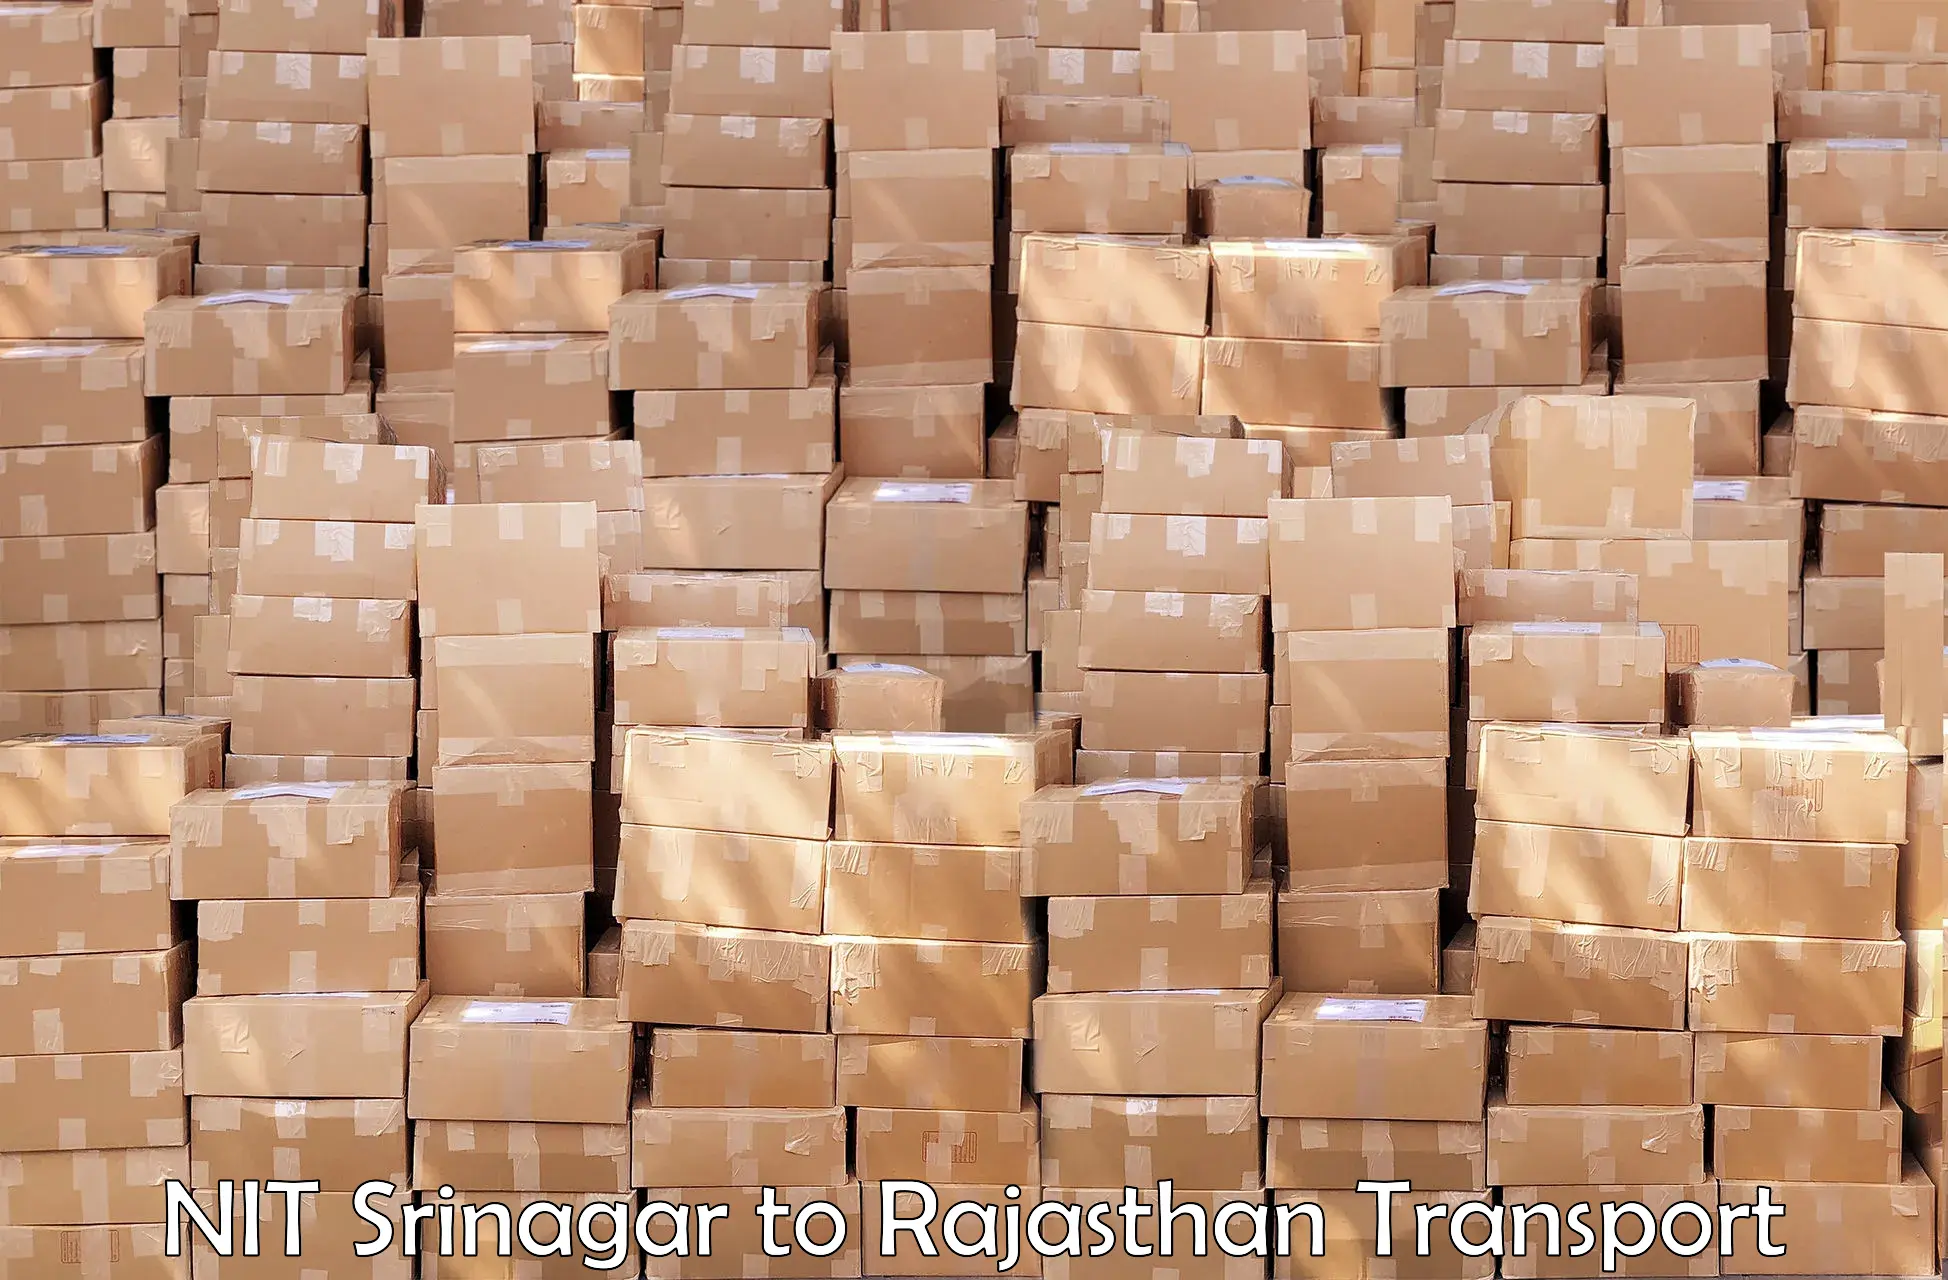 Shipping partner NIT Srinagar to Udaipur